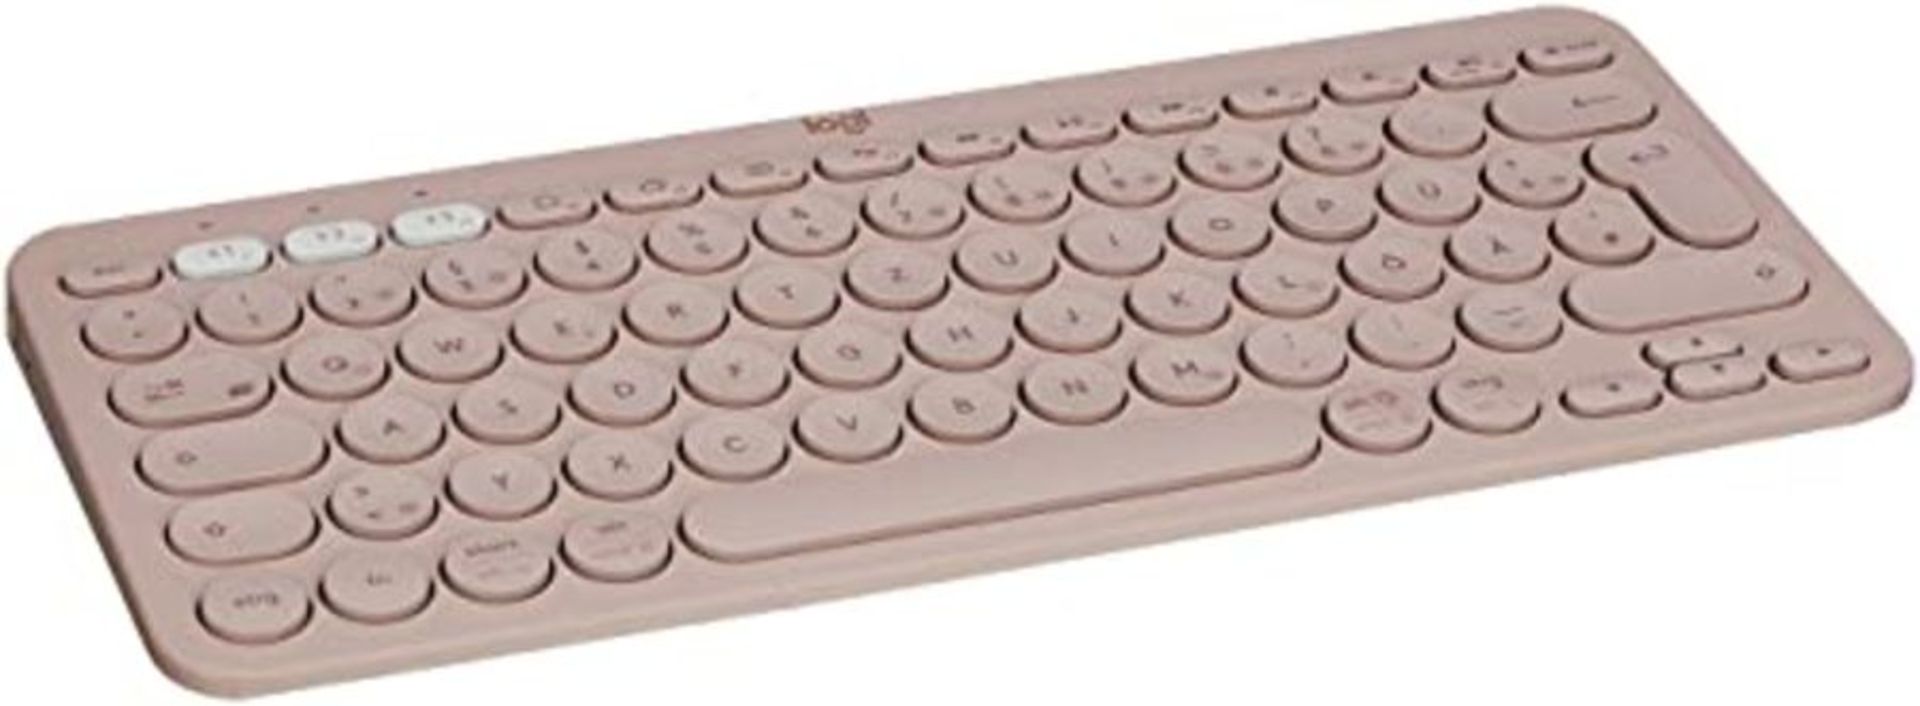 Logitech K380 Multi-Device Bluetooth Keyboard, QWERTZ German Layout - Pink